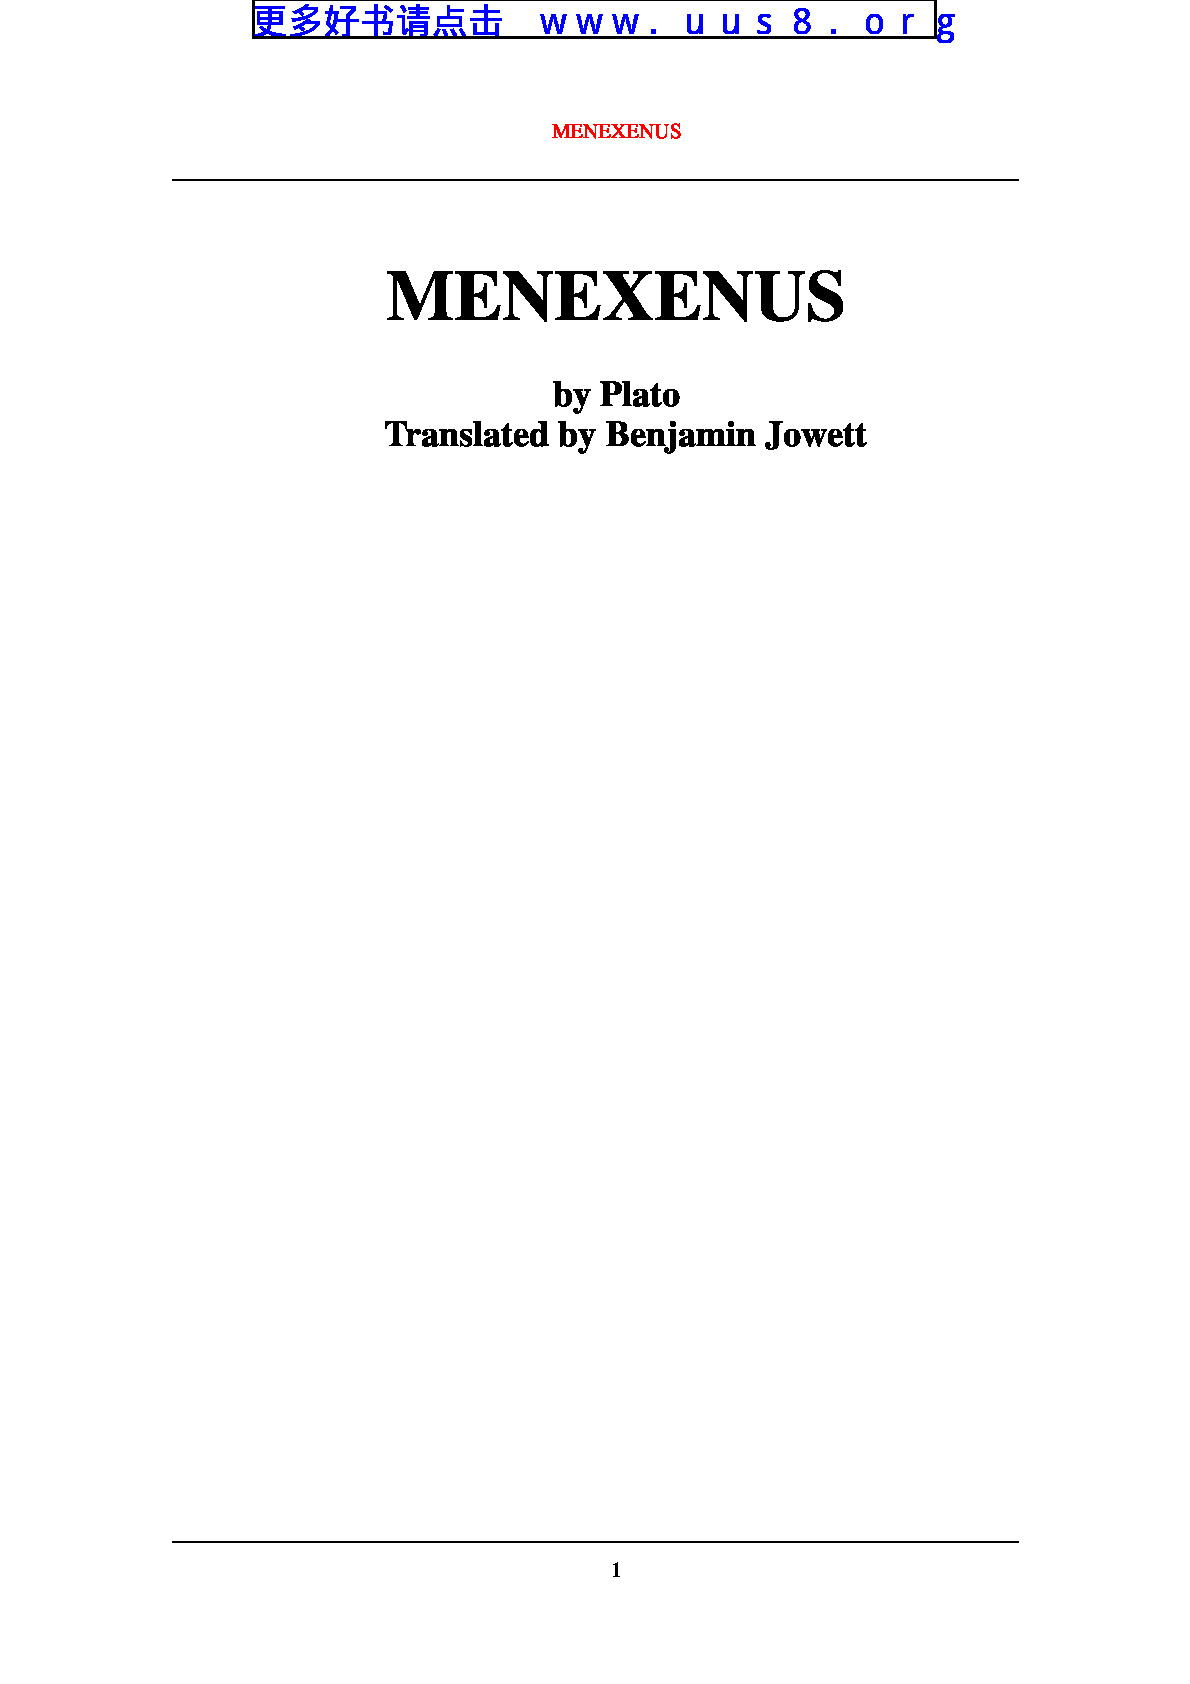 MENEXENUS(门内克西纳斯) – 副本